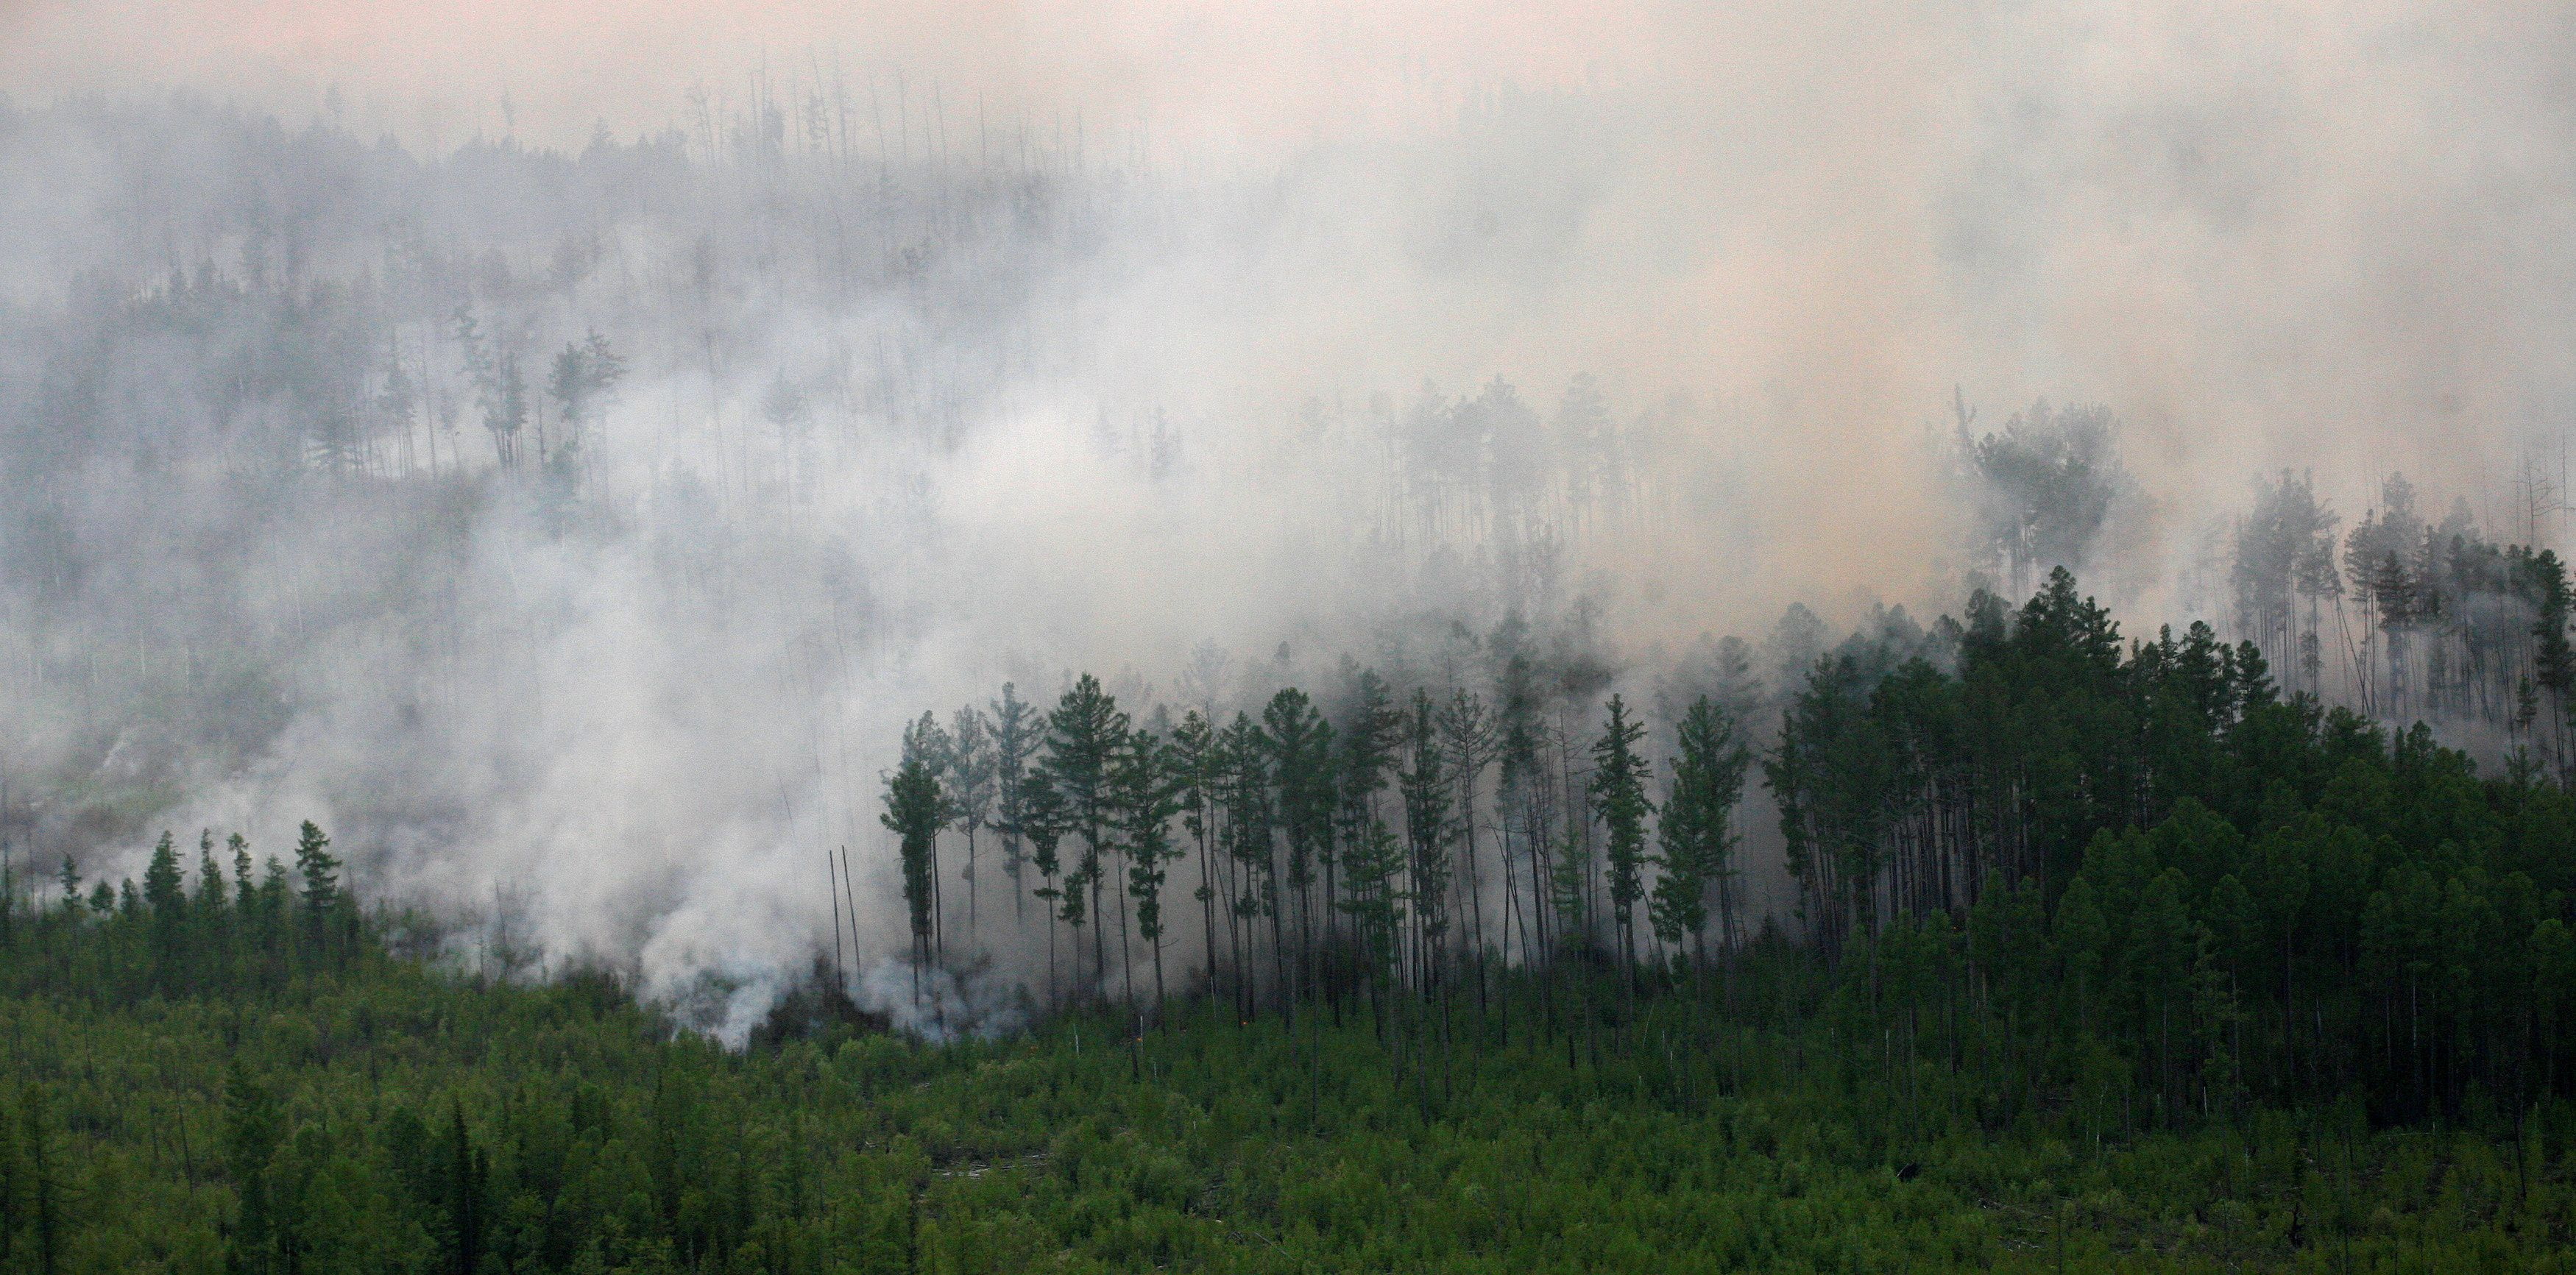 An aerial view shows the Taiga wood burning near Boguchany